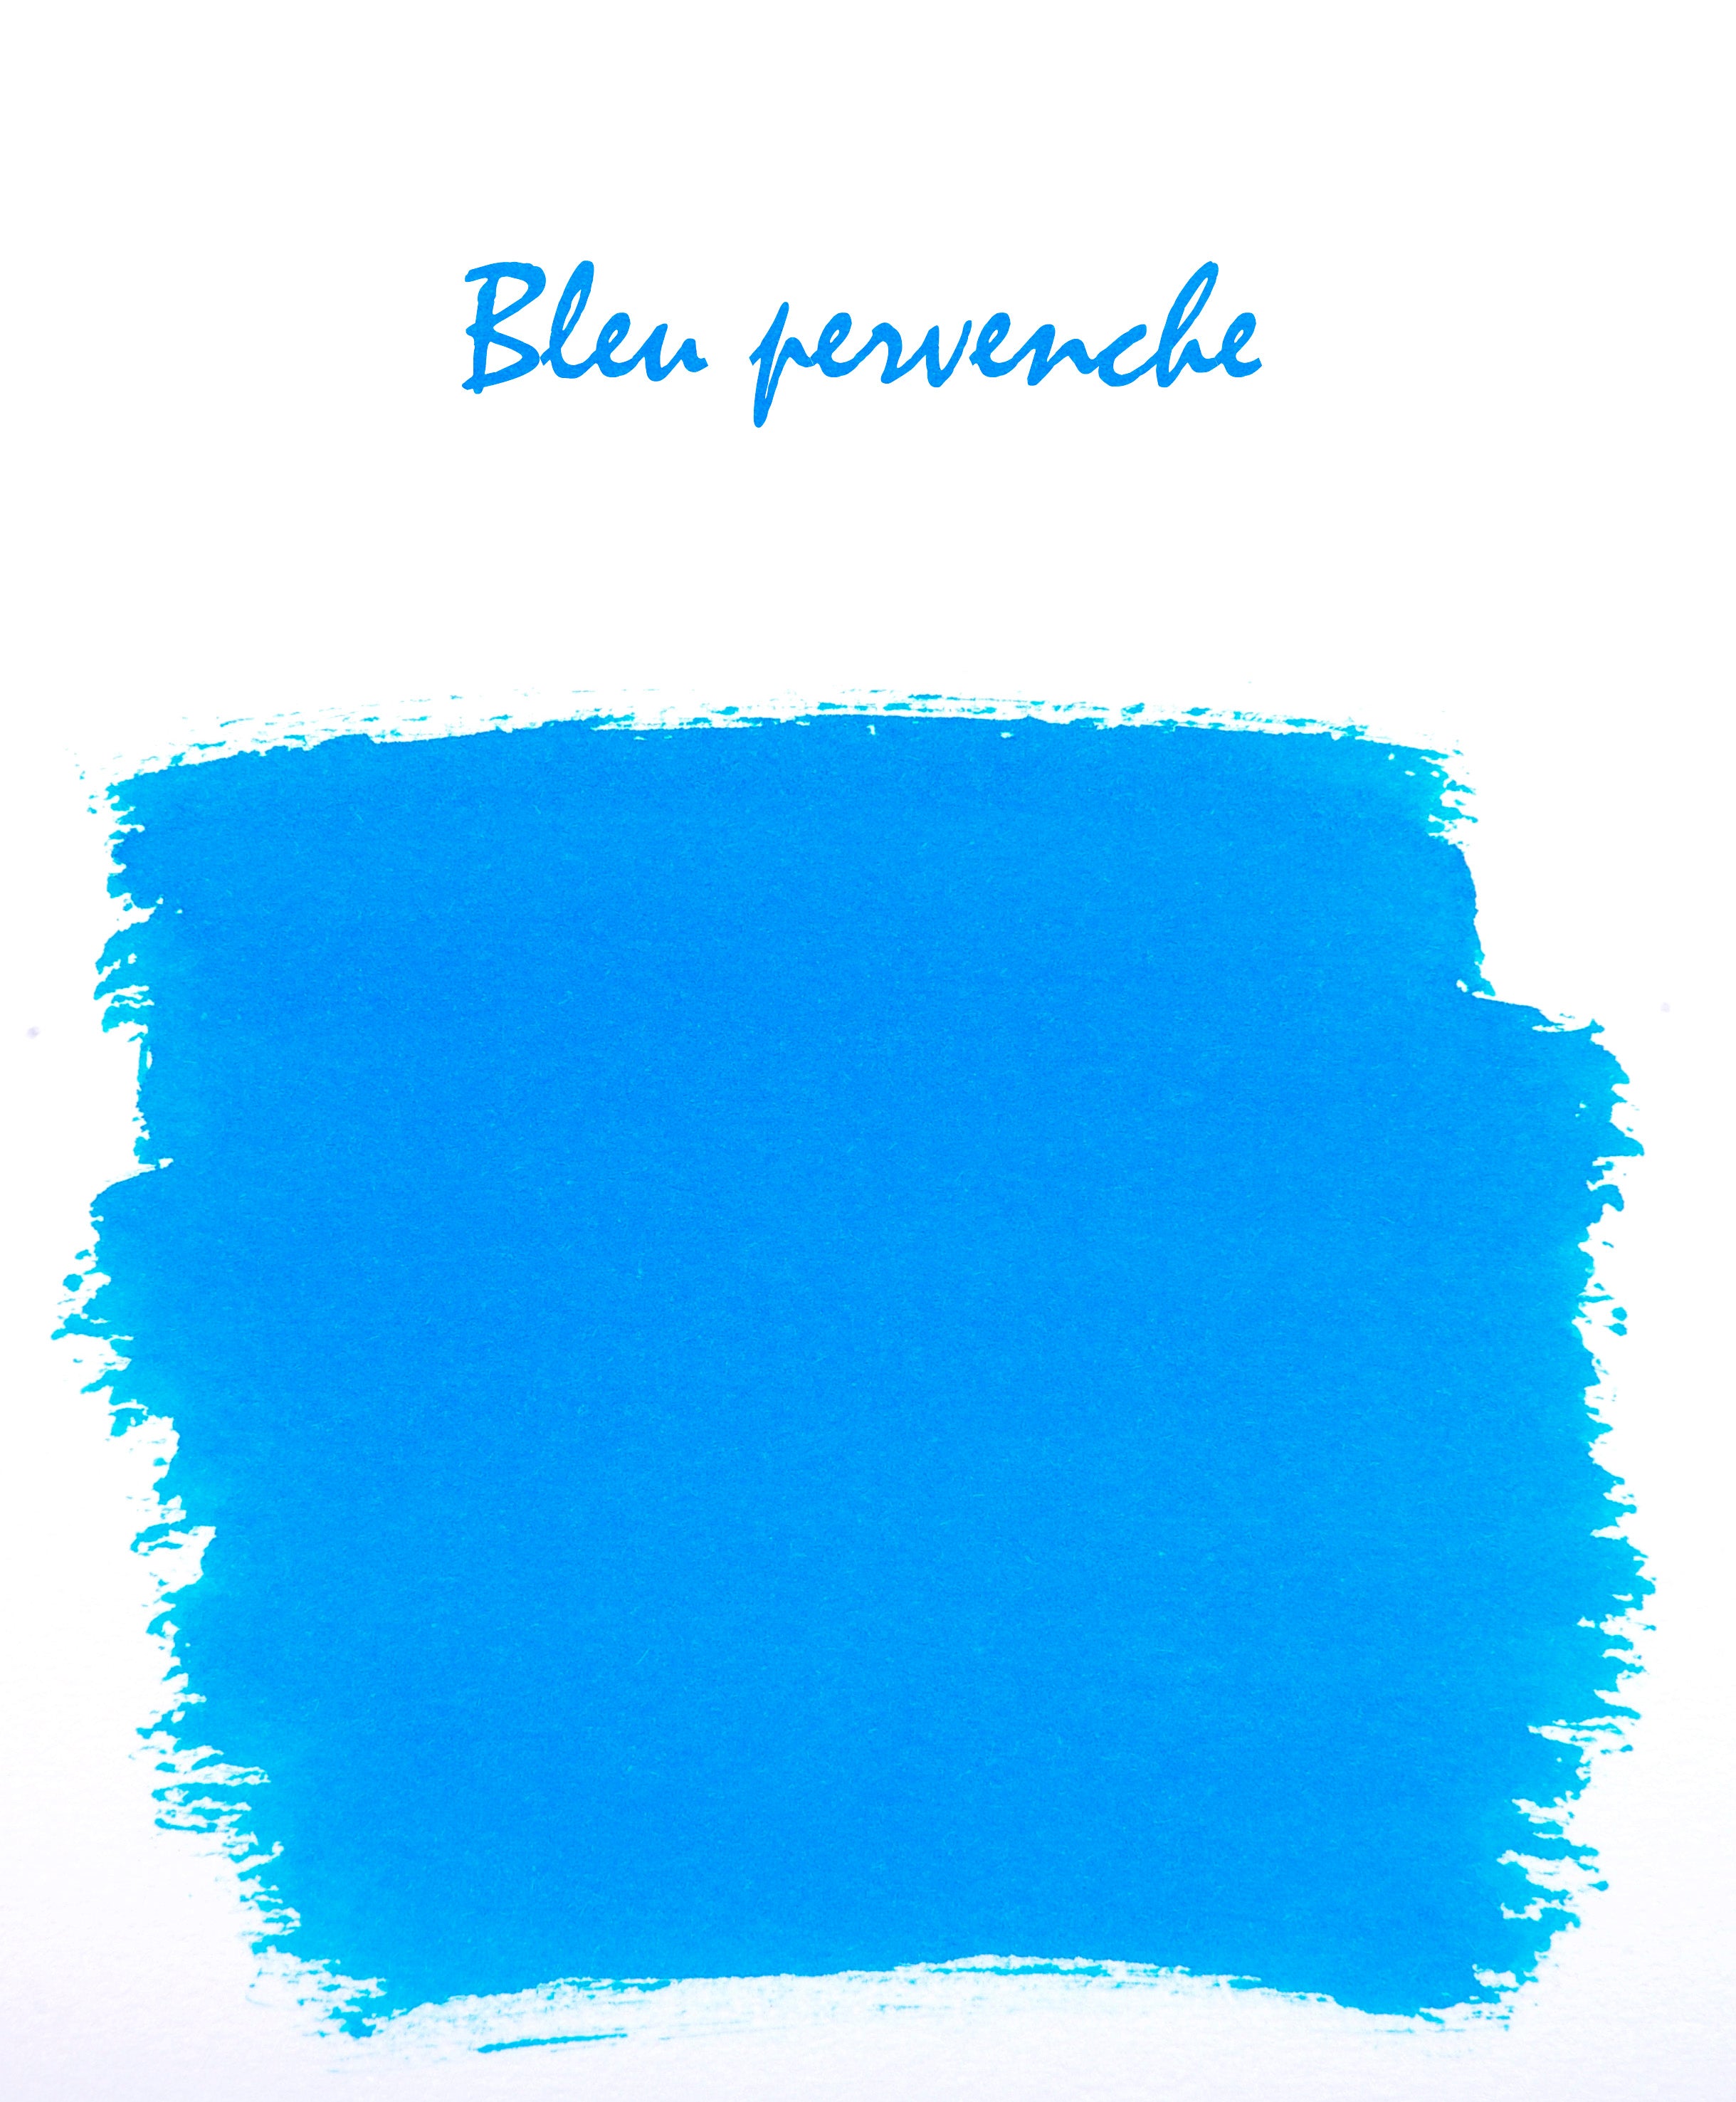 Herbin - Bleu pervenche (hellblau), 10 ml